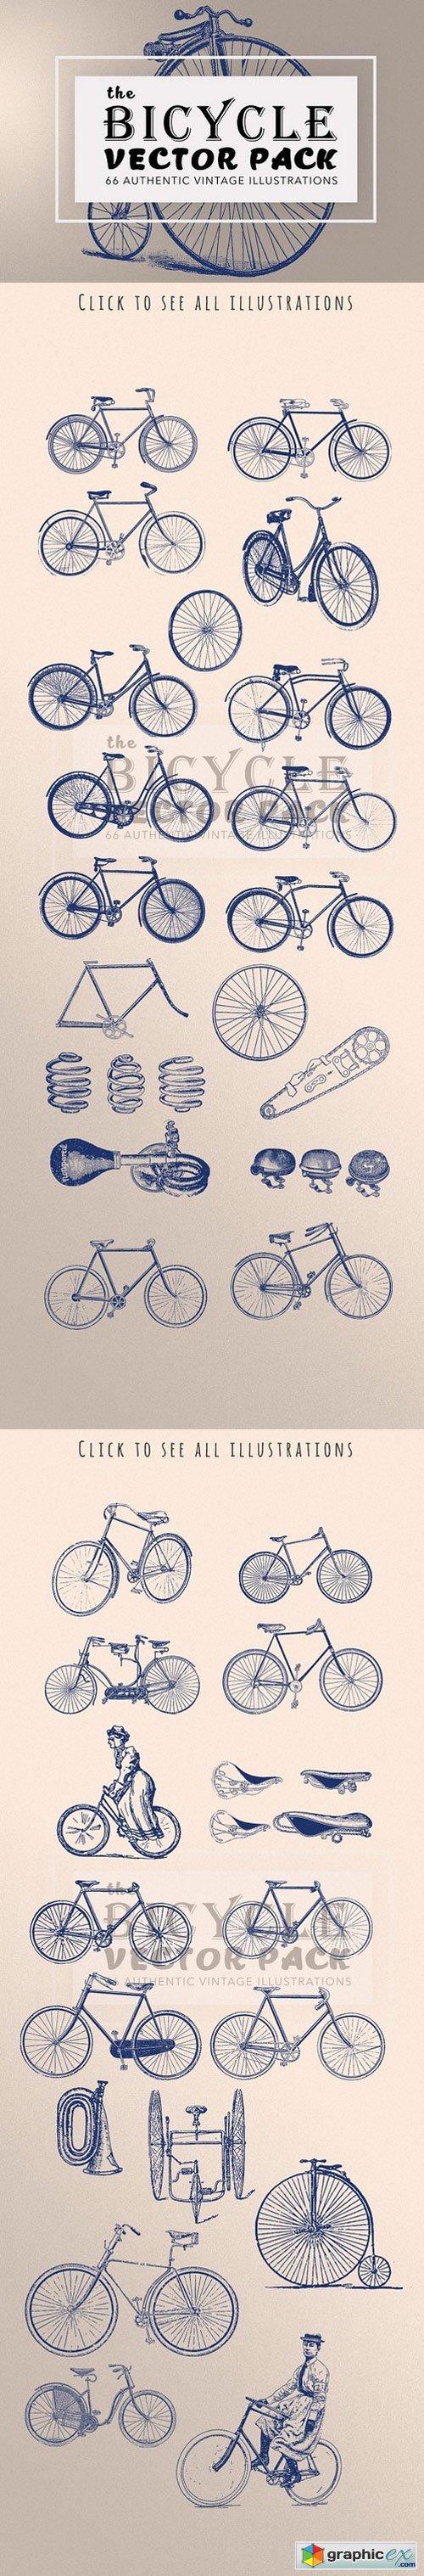 Vintage Bicycle Illustration Bundle